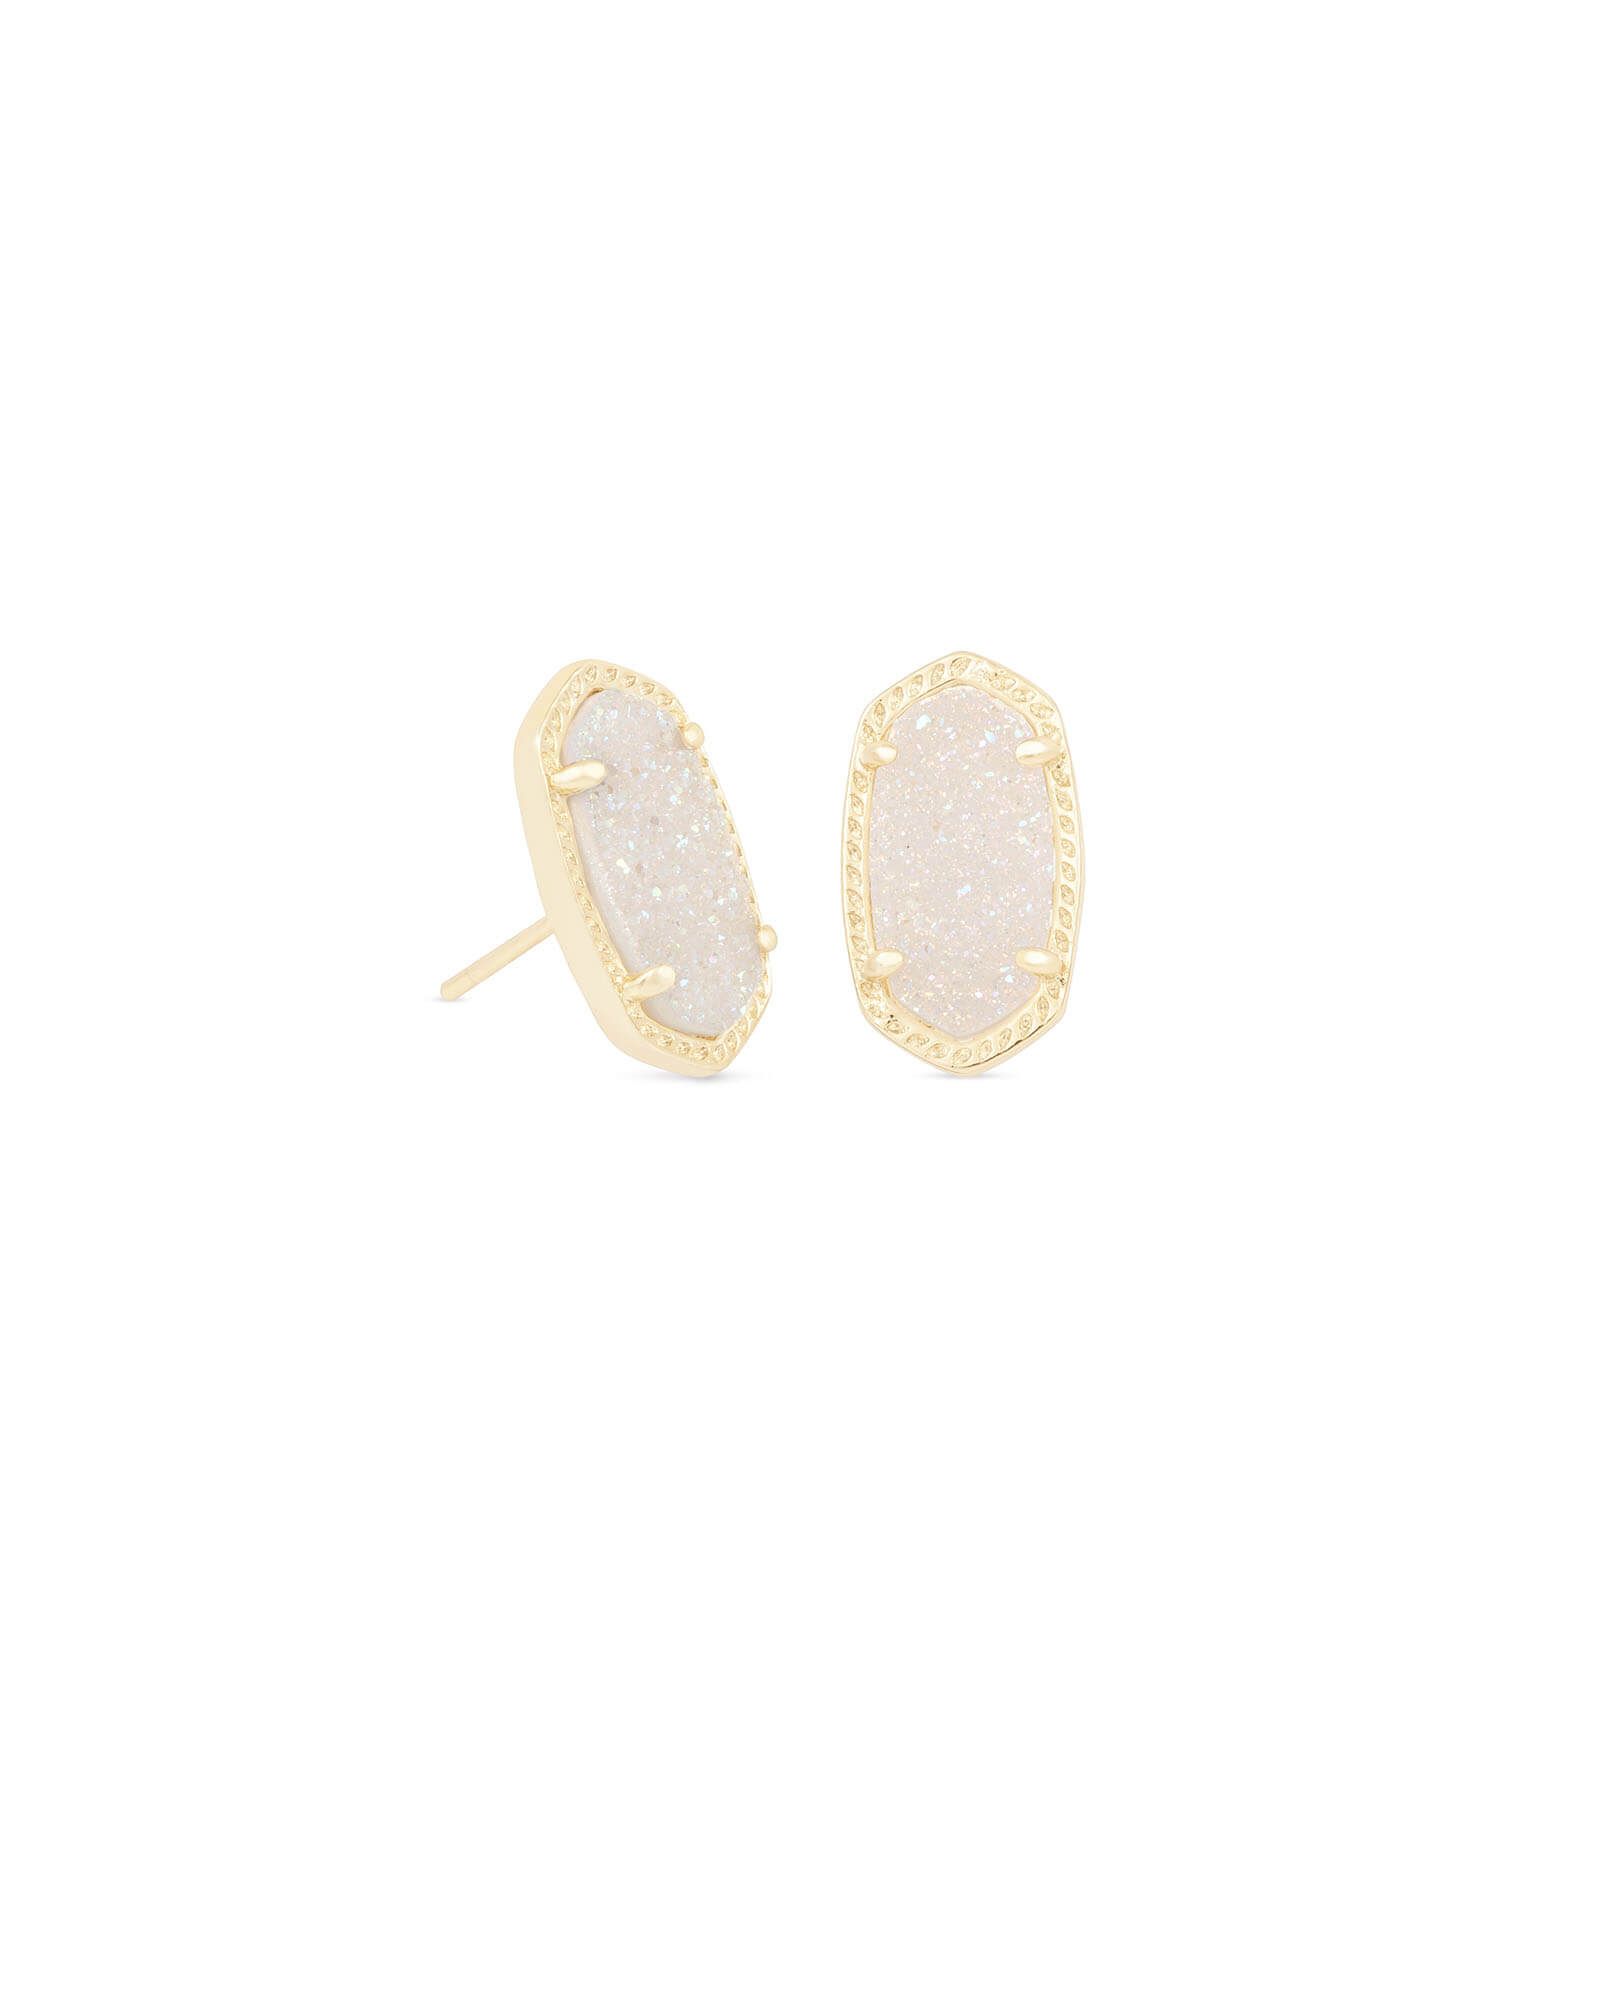 Ellie Gold Stud Earrings in Iridescent Drusy | Kendra Scott